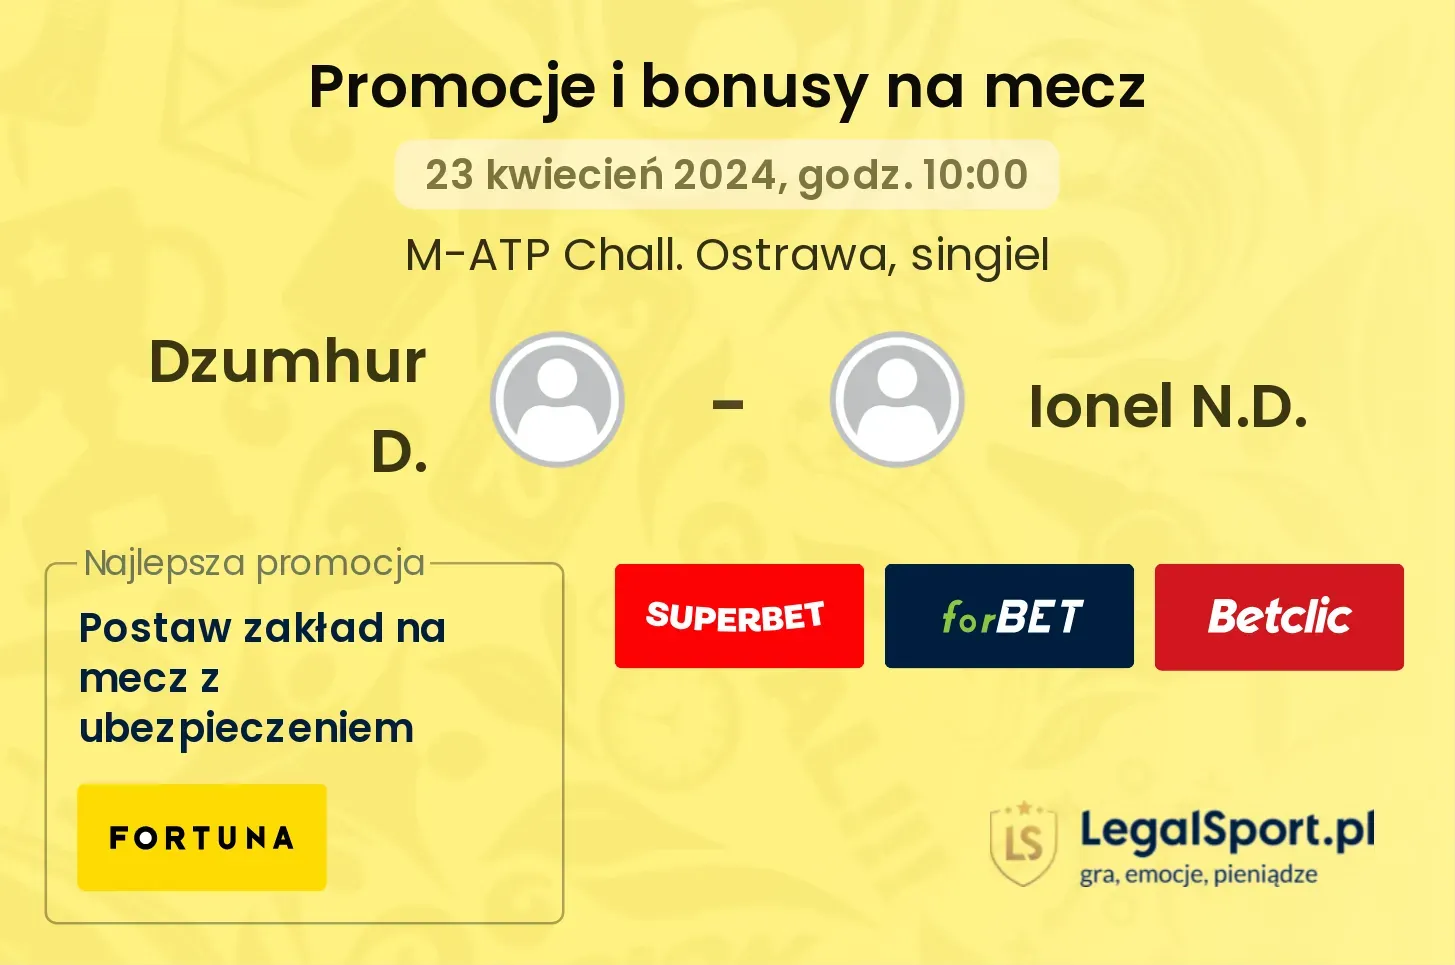 Dzumhur D. - Ionel N.D. promocje bonusy na mecz